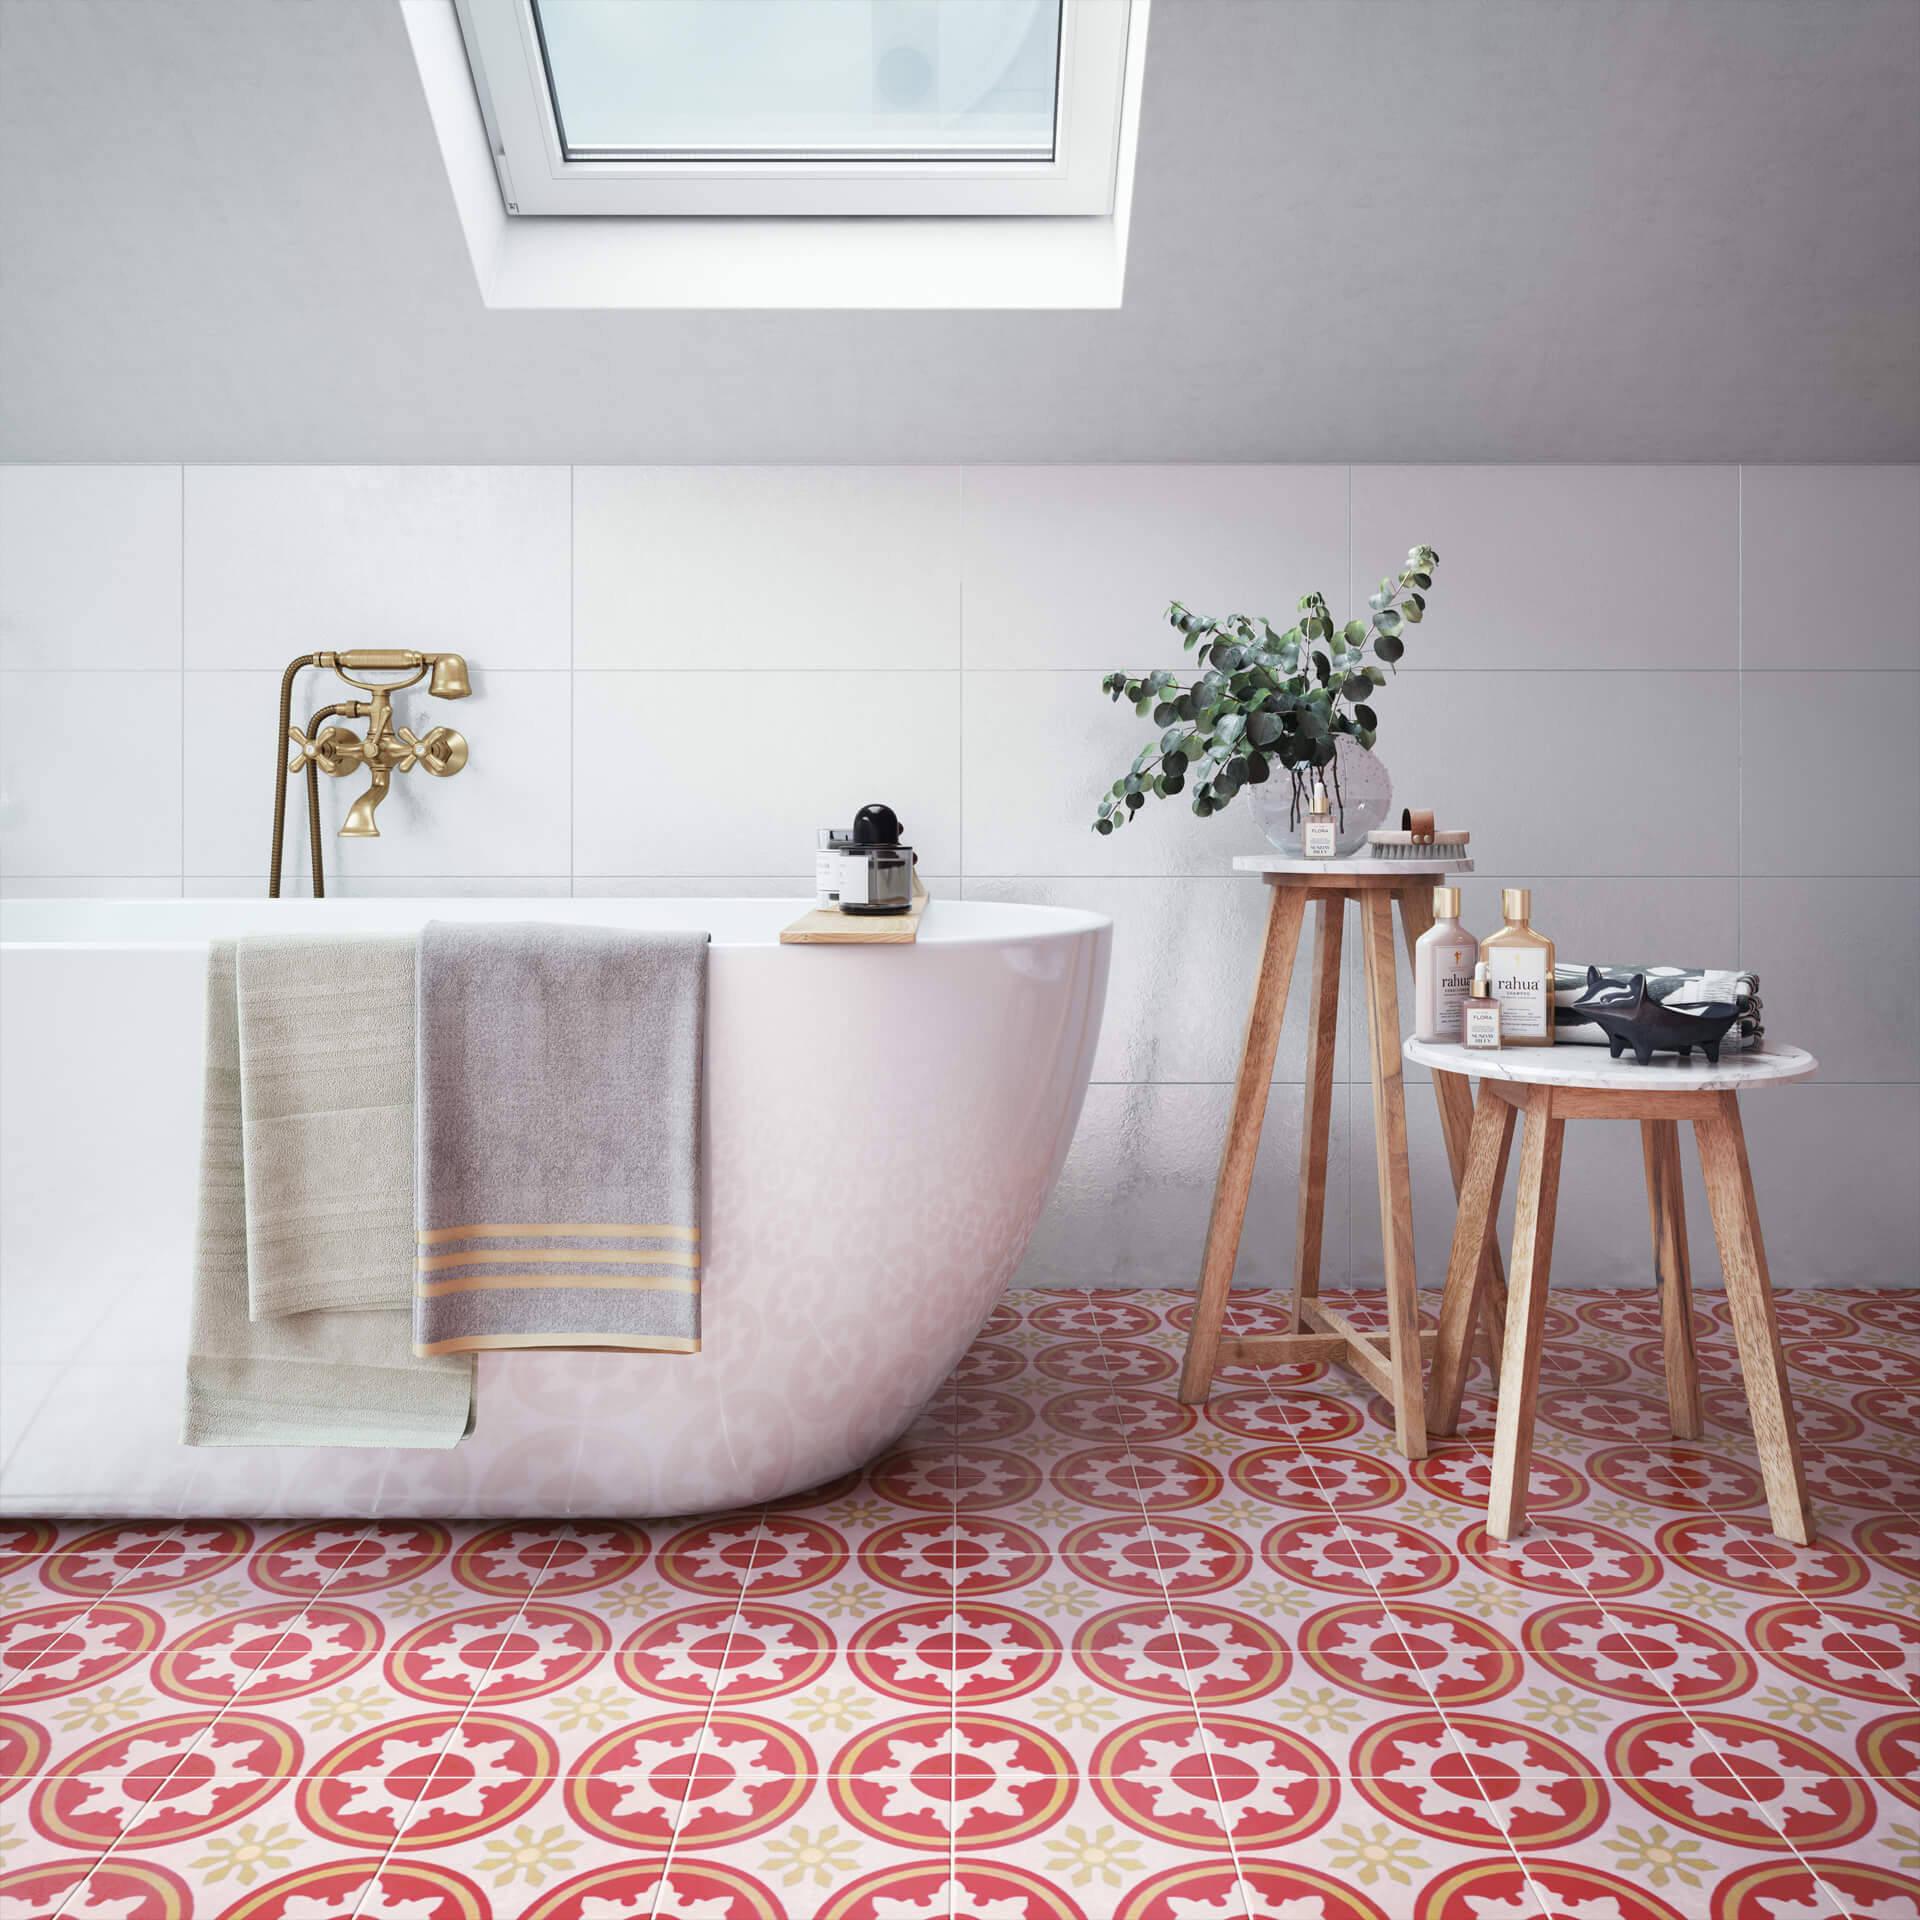 3D Rendering of Tiles in a Bathroom